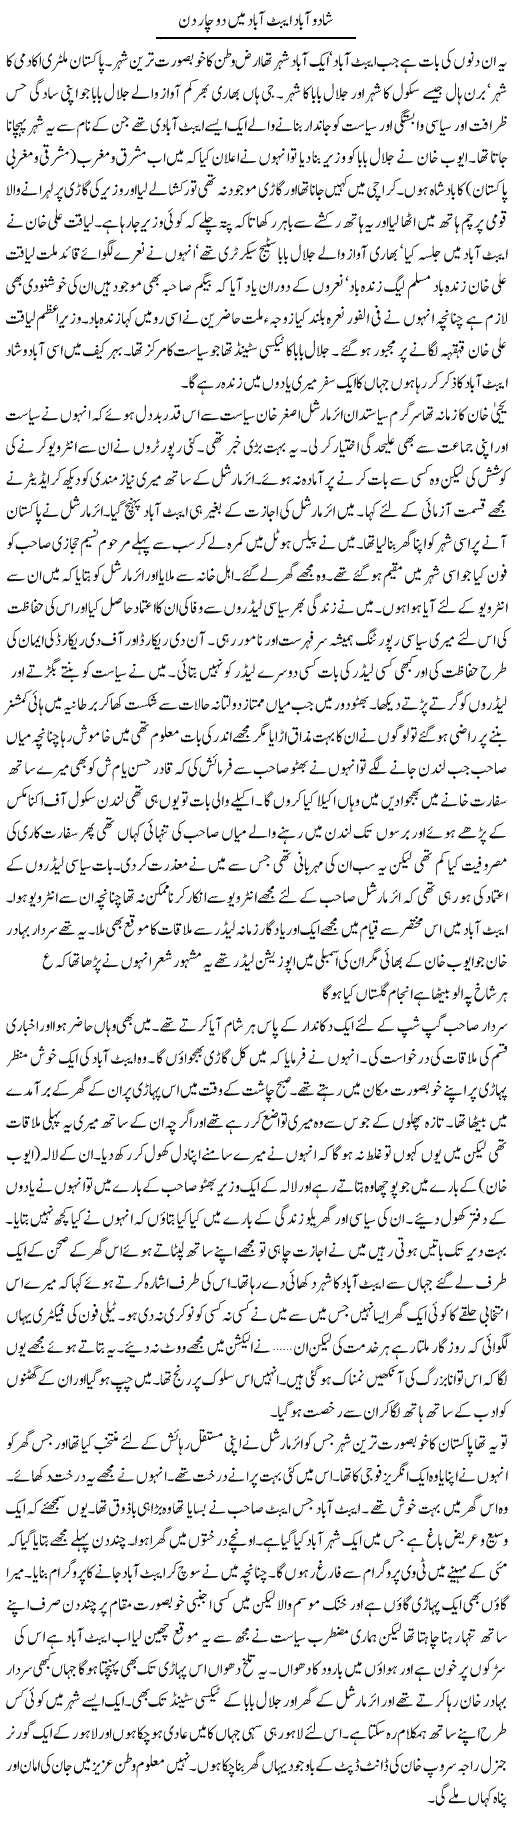 Shado abad Abotabad Express Column Abdul Qadir Hasan 15 April 2010